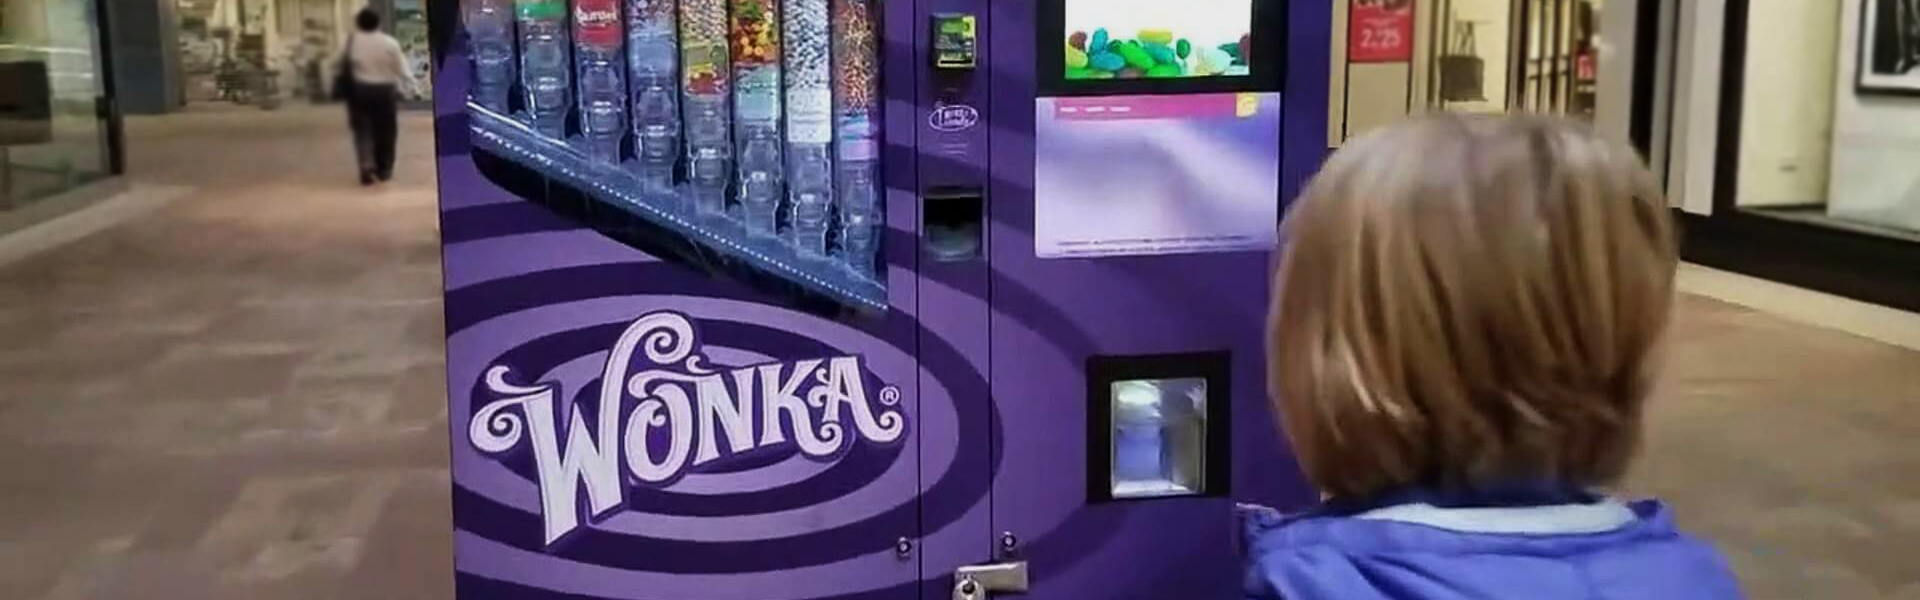 Wonka Candy Campaign